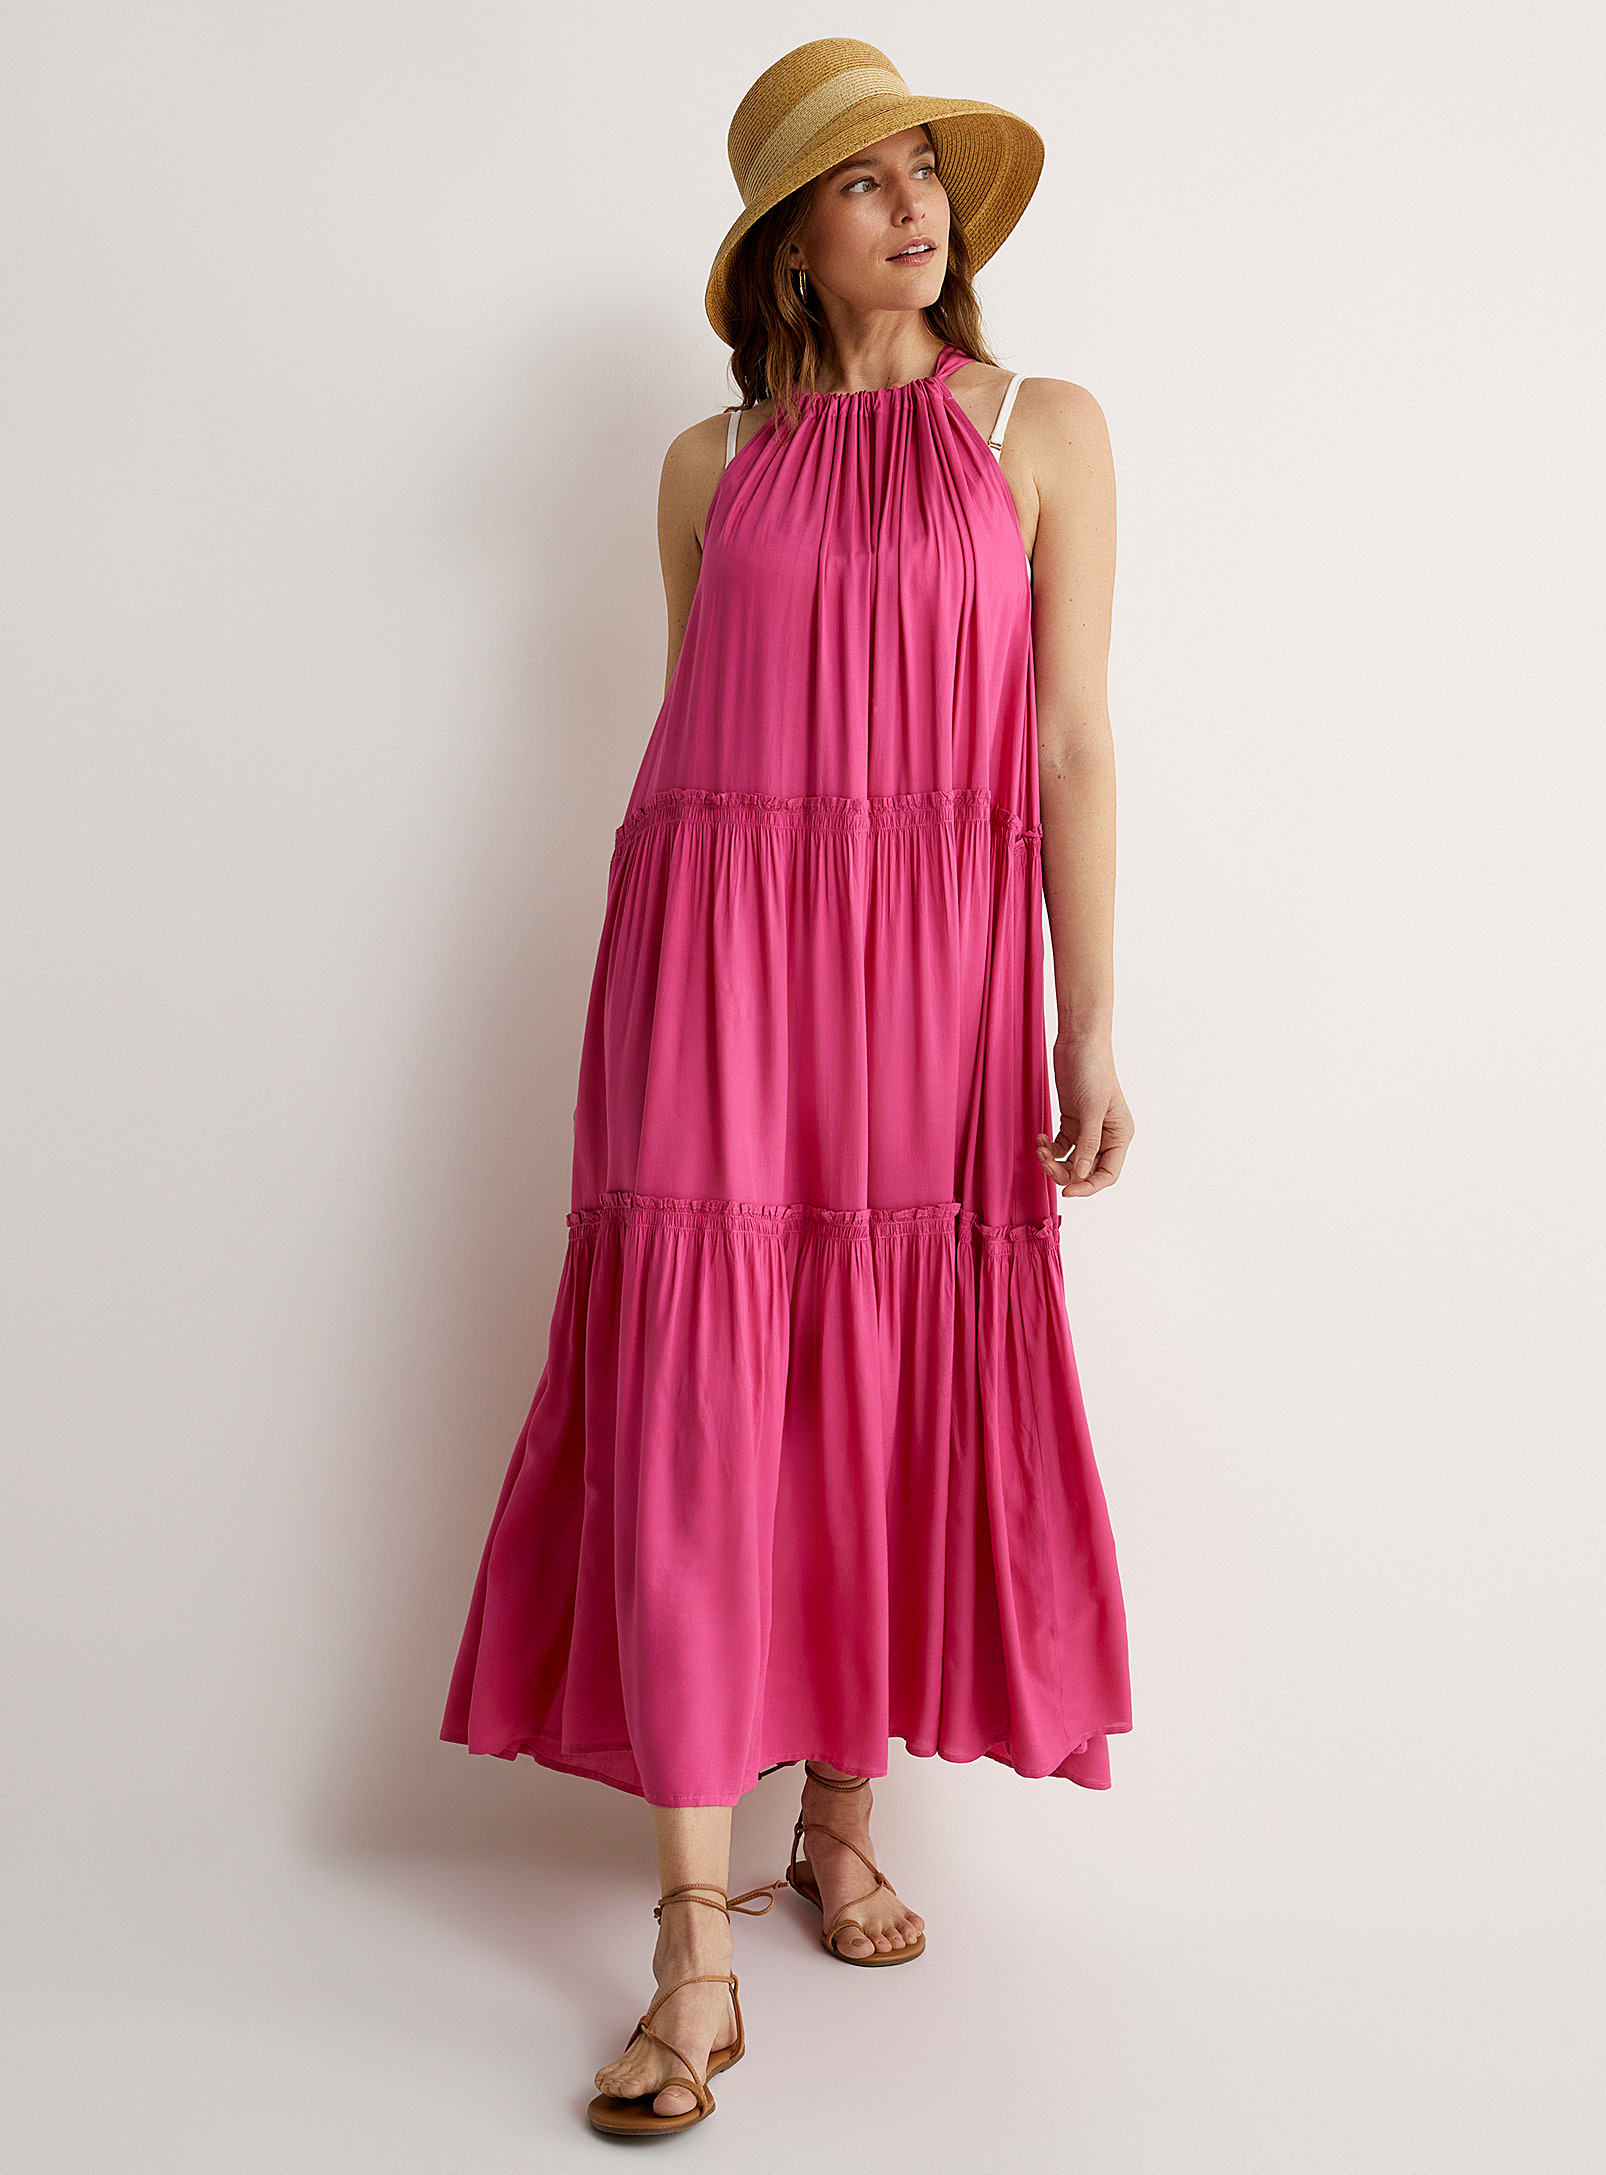 Simons - Women's Fuchsia pink tiered maxi dress